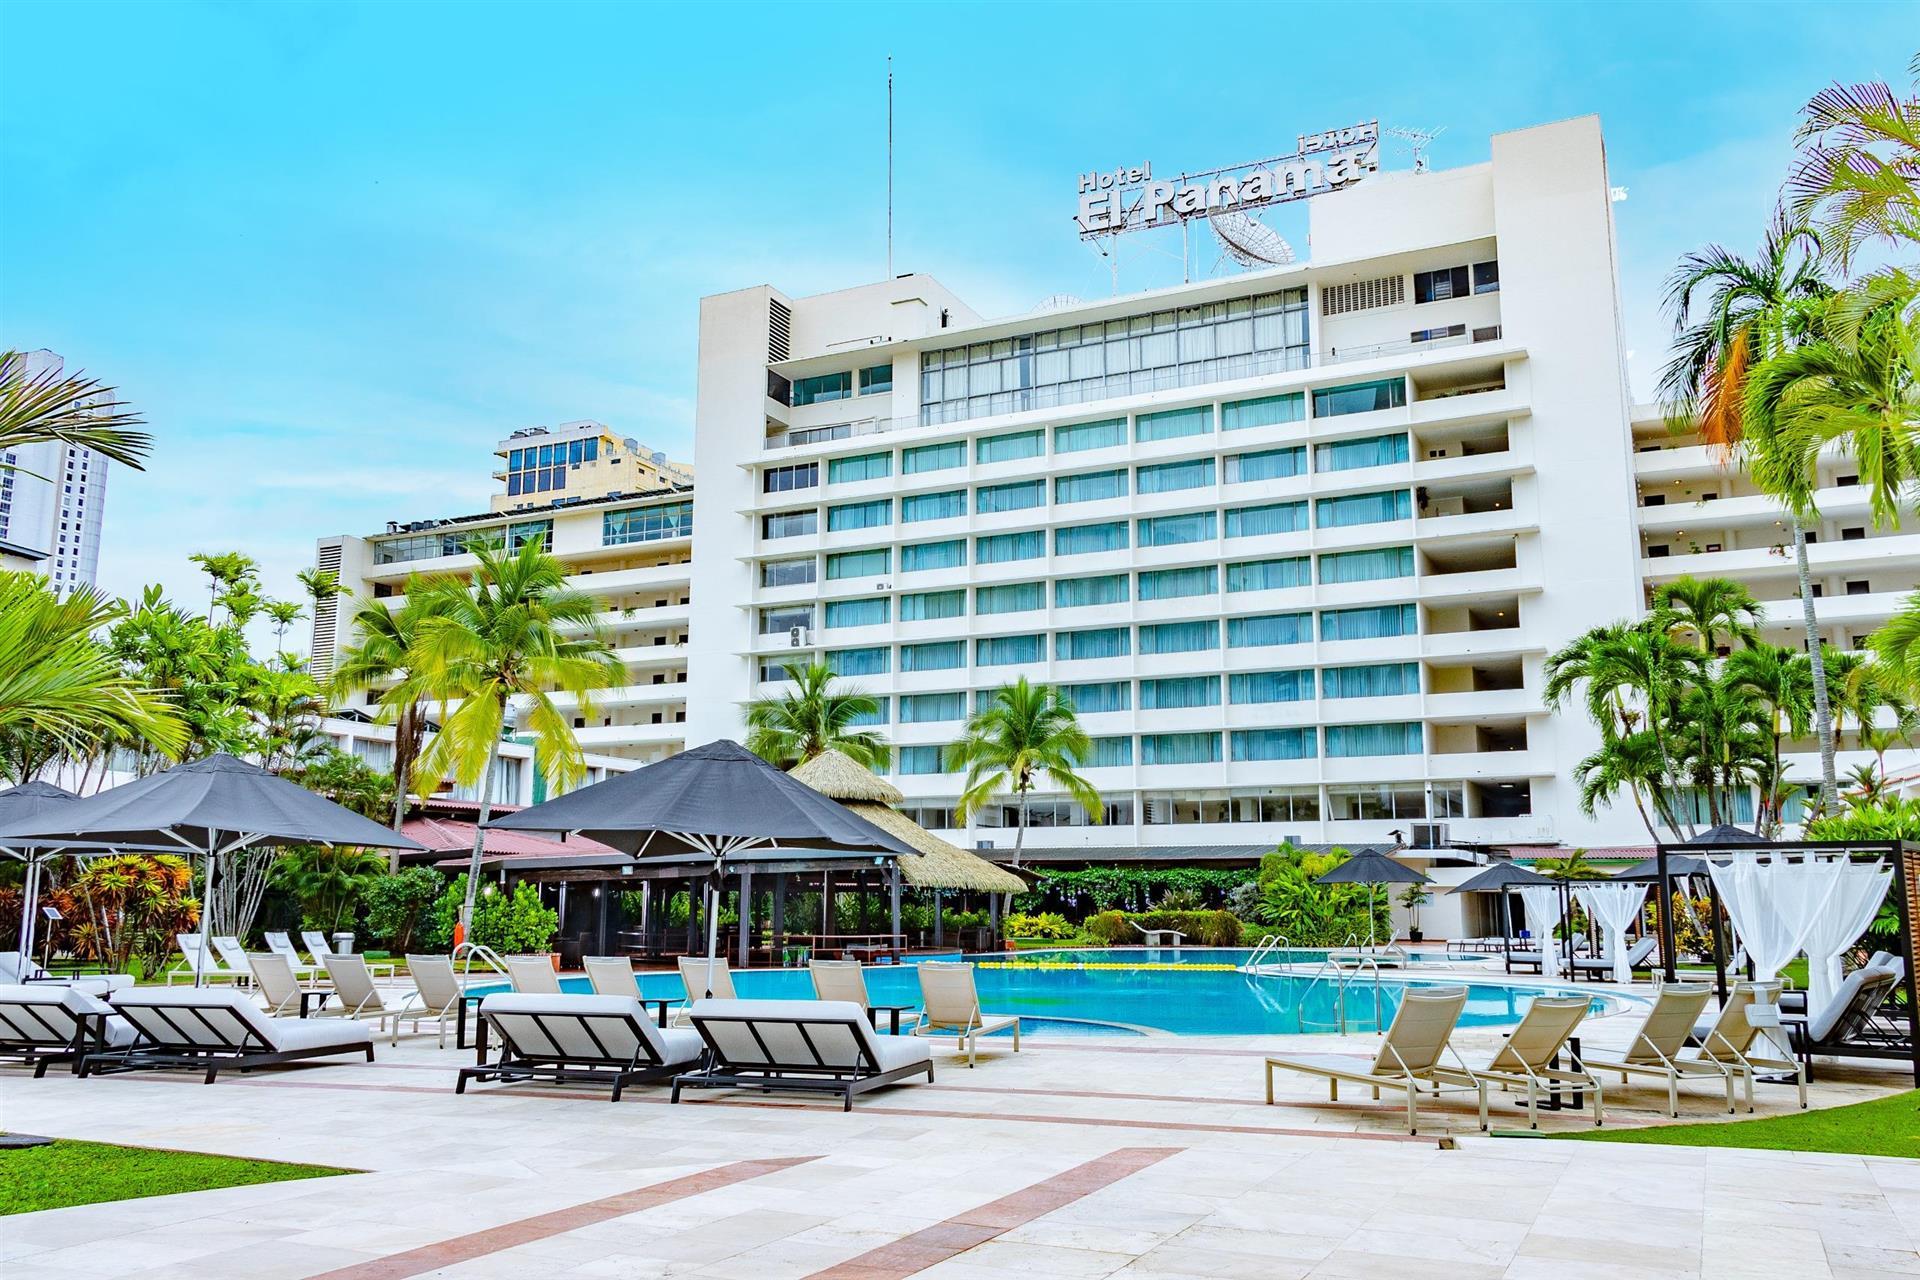 Hotel El Panama by Faranda Grand, a member of Radisson Individuals in Panama City, PA